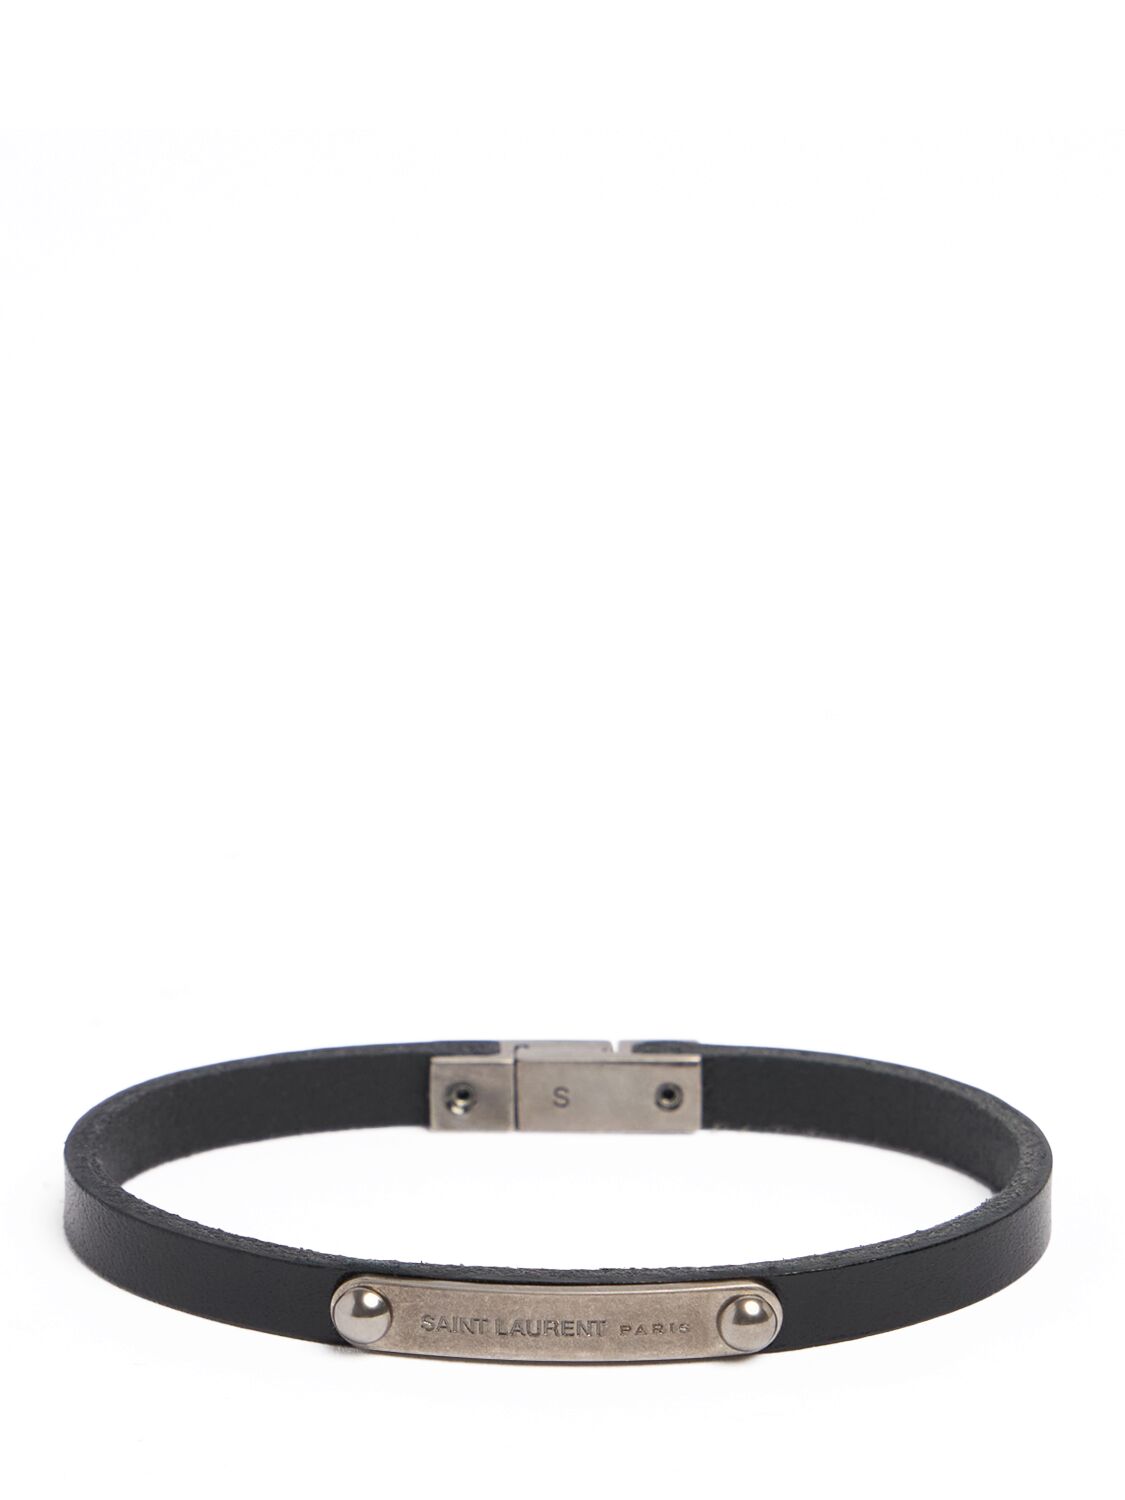 Saint Laurent Ysl Bracelet In Black